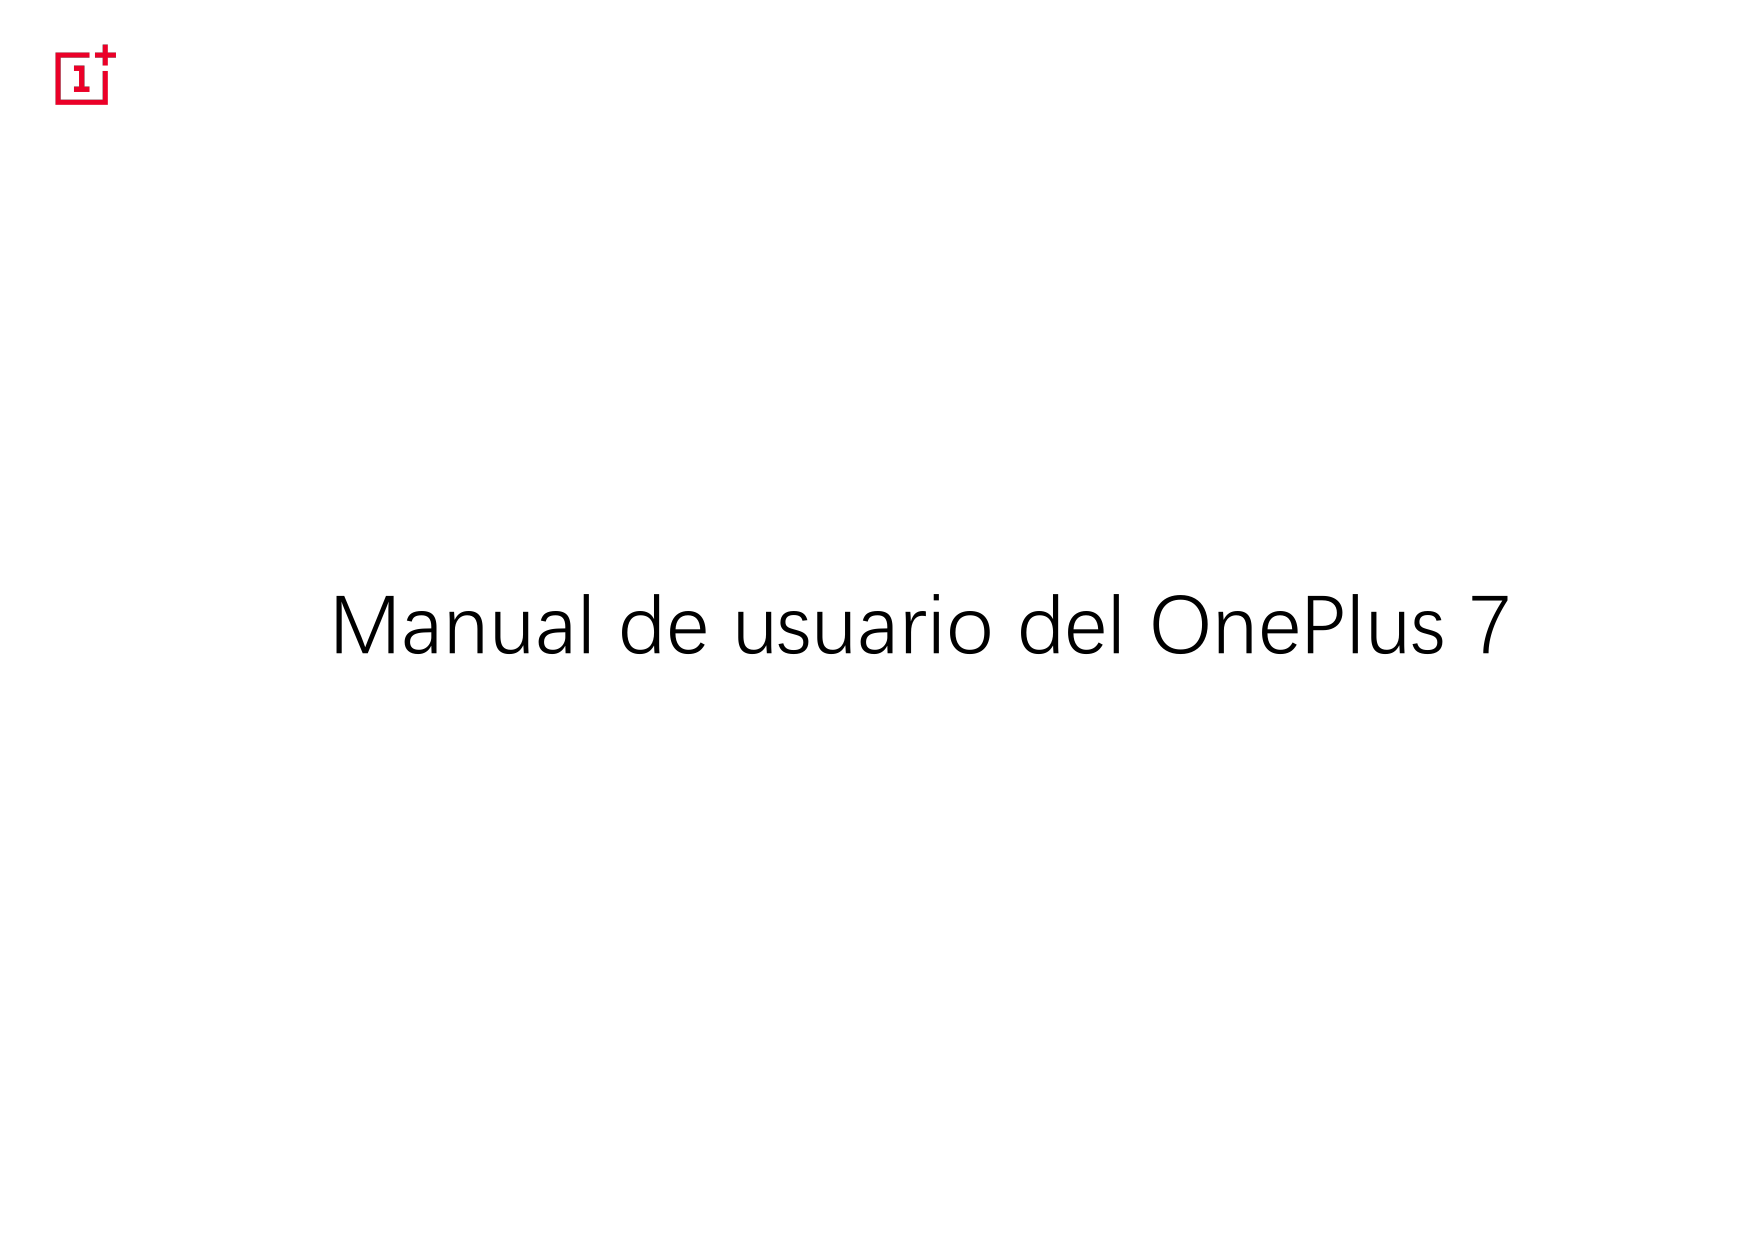 Manual de usuario del OnePlus 7